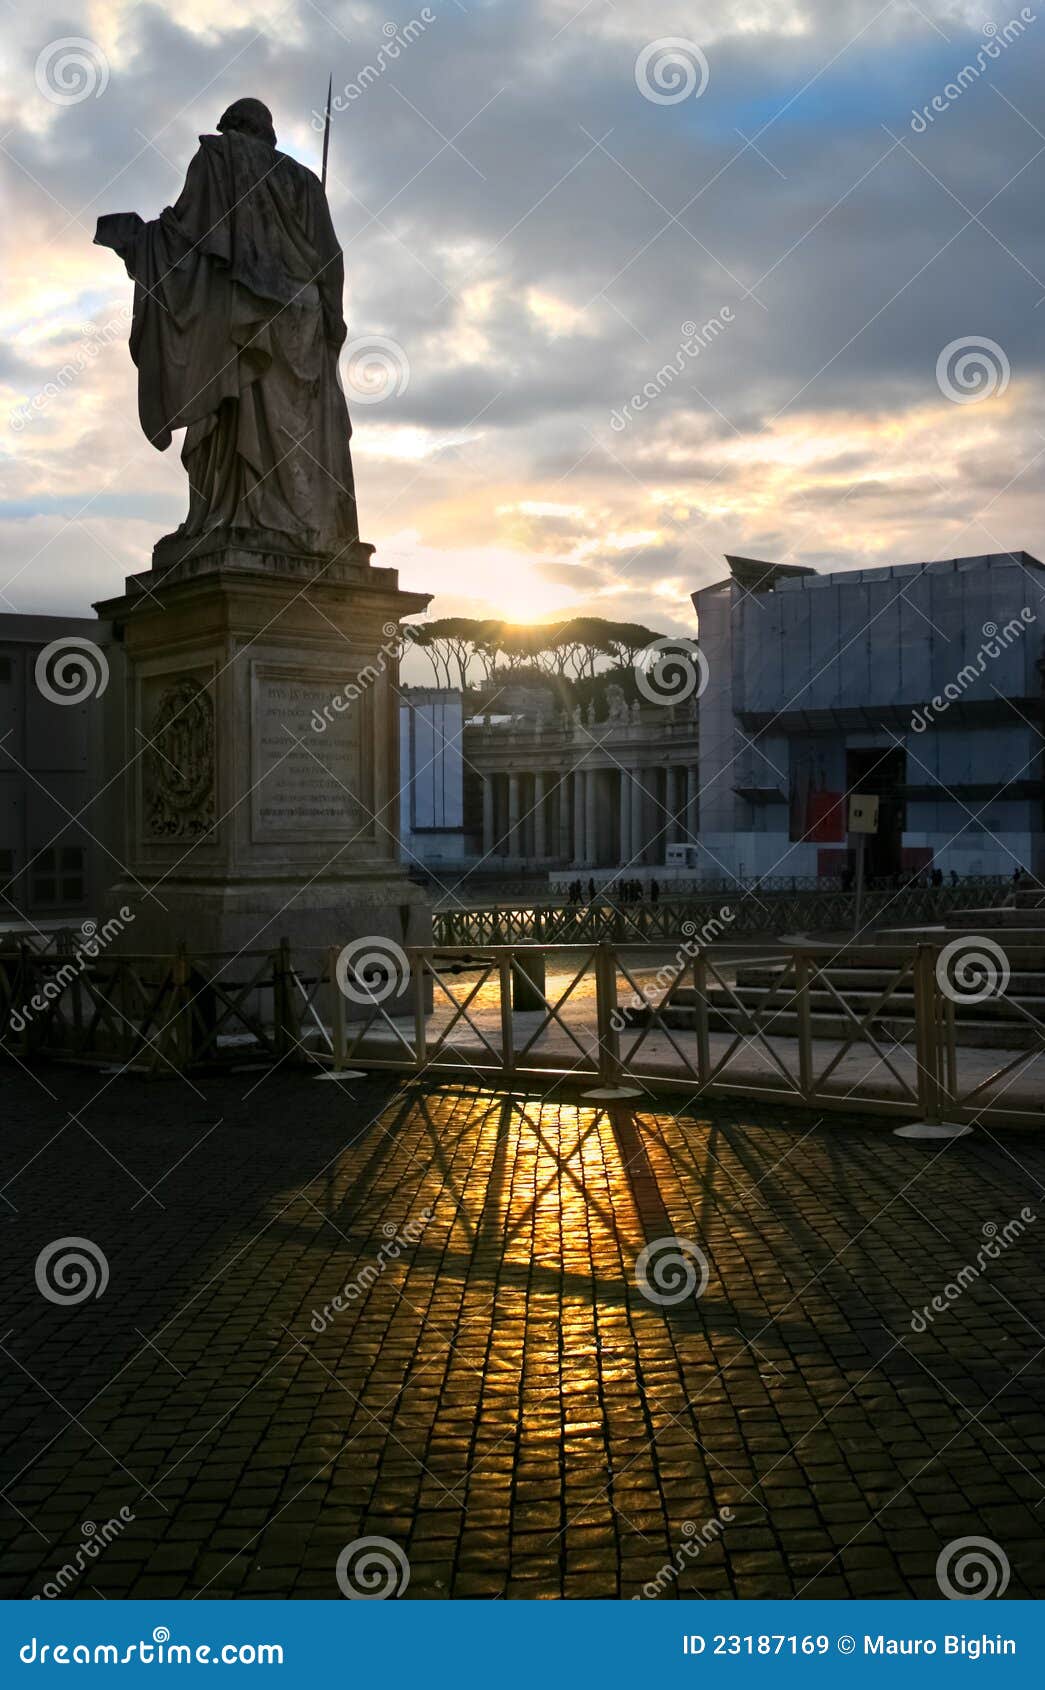 saint peter square at dawn - rome - italy